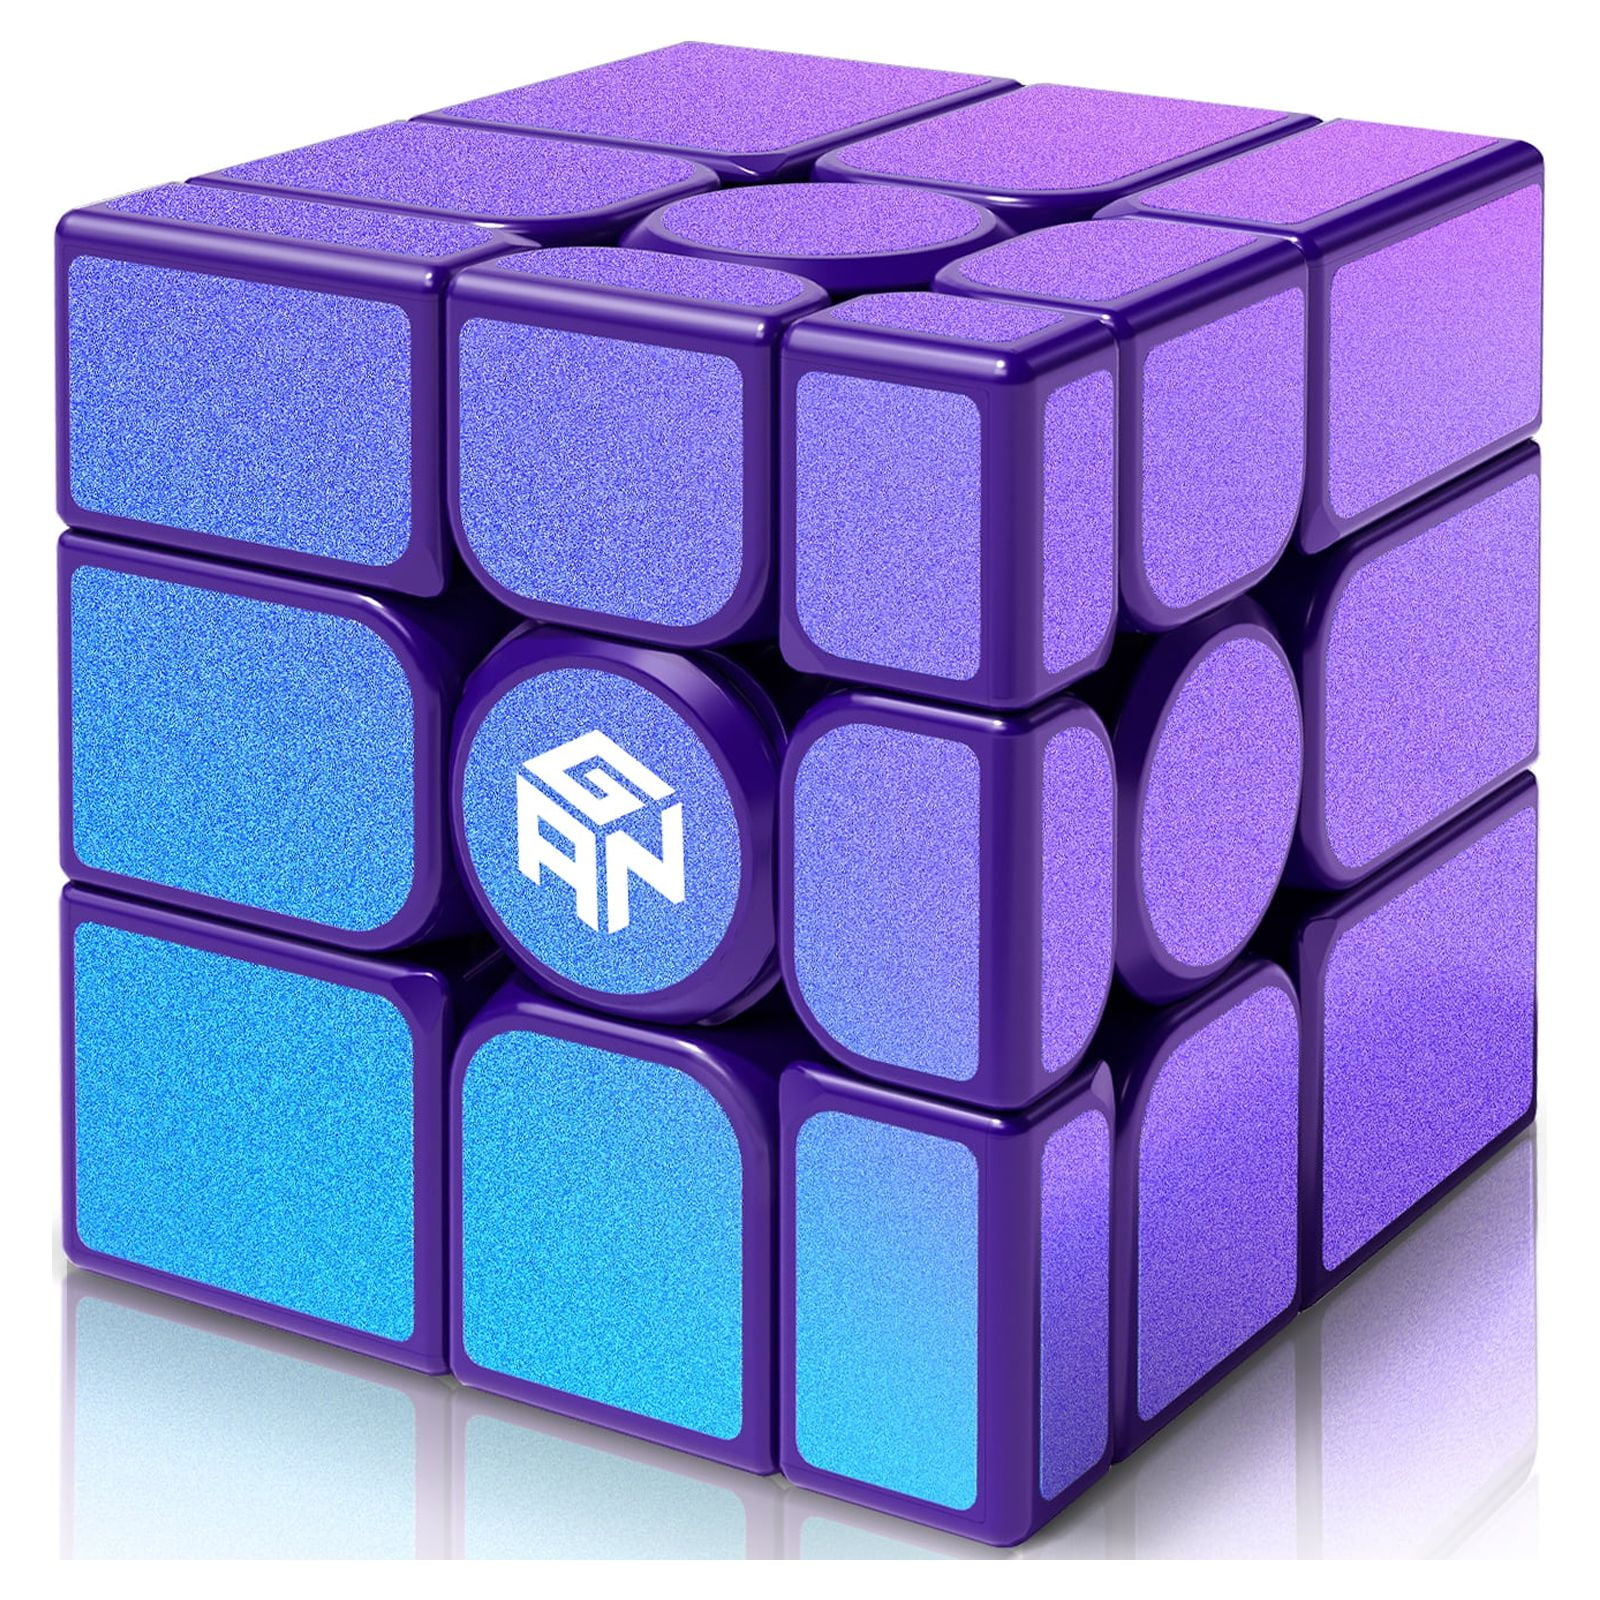 Just a GAN cube doing GAN things : r/Cubers